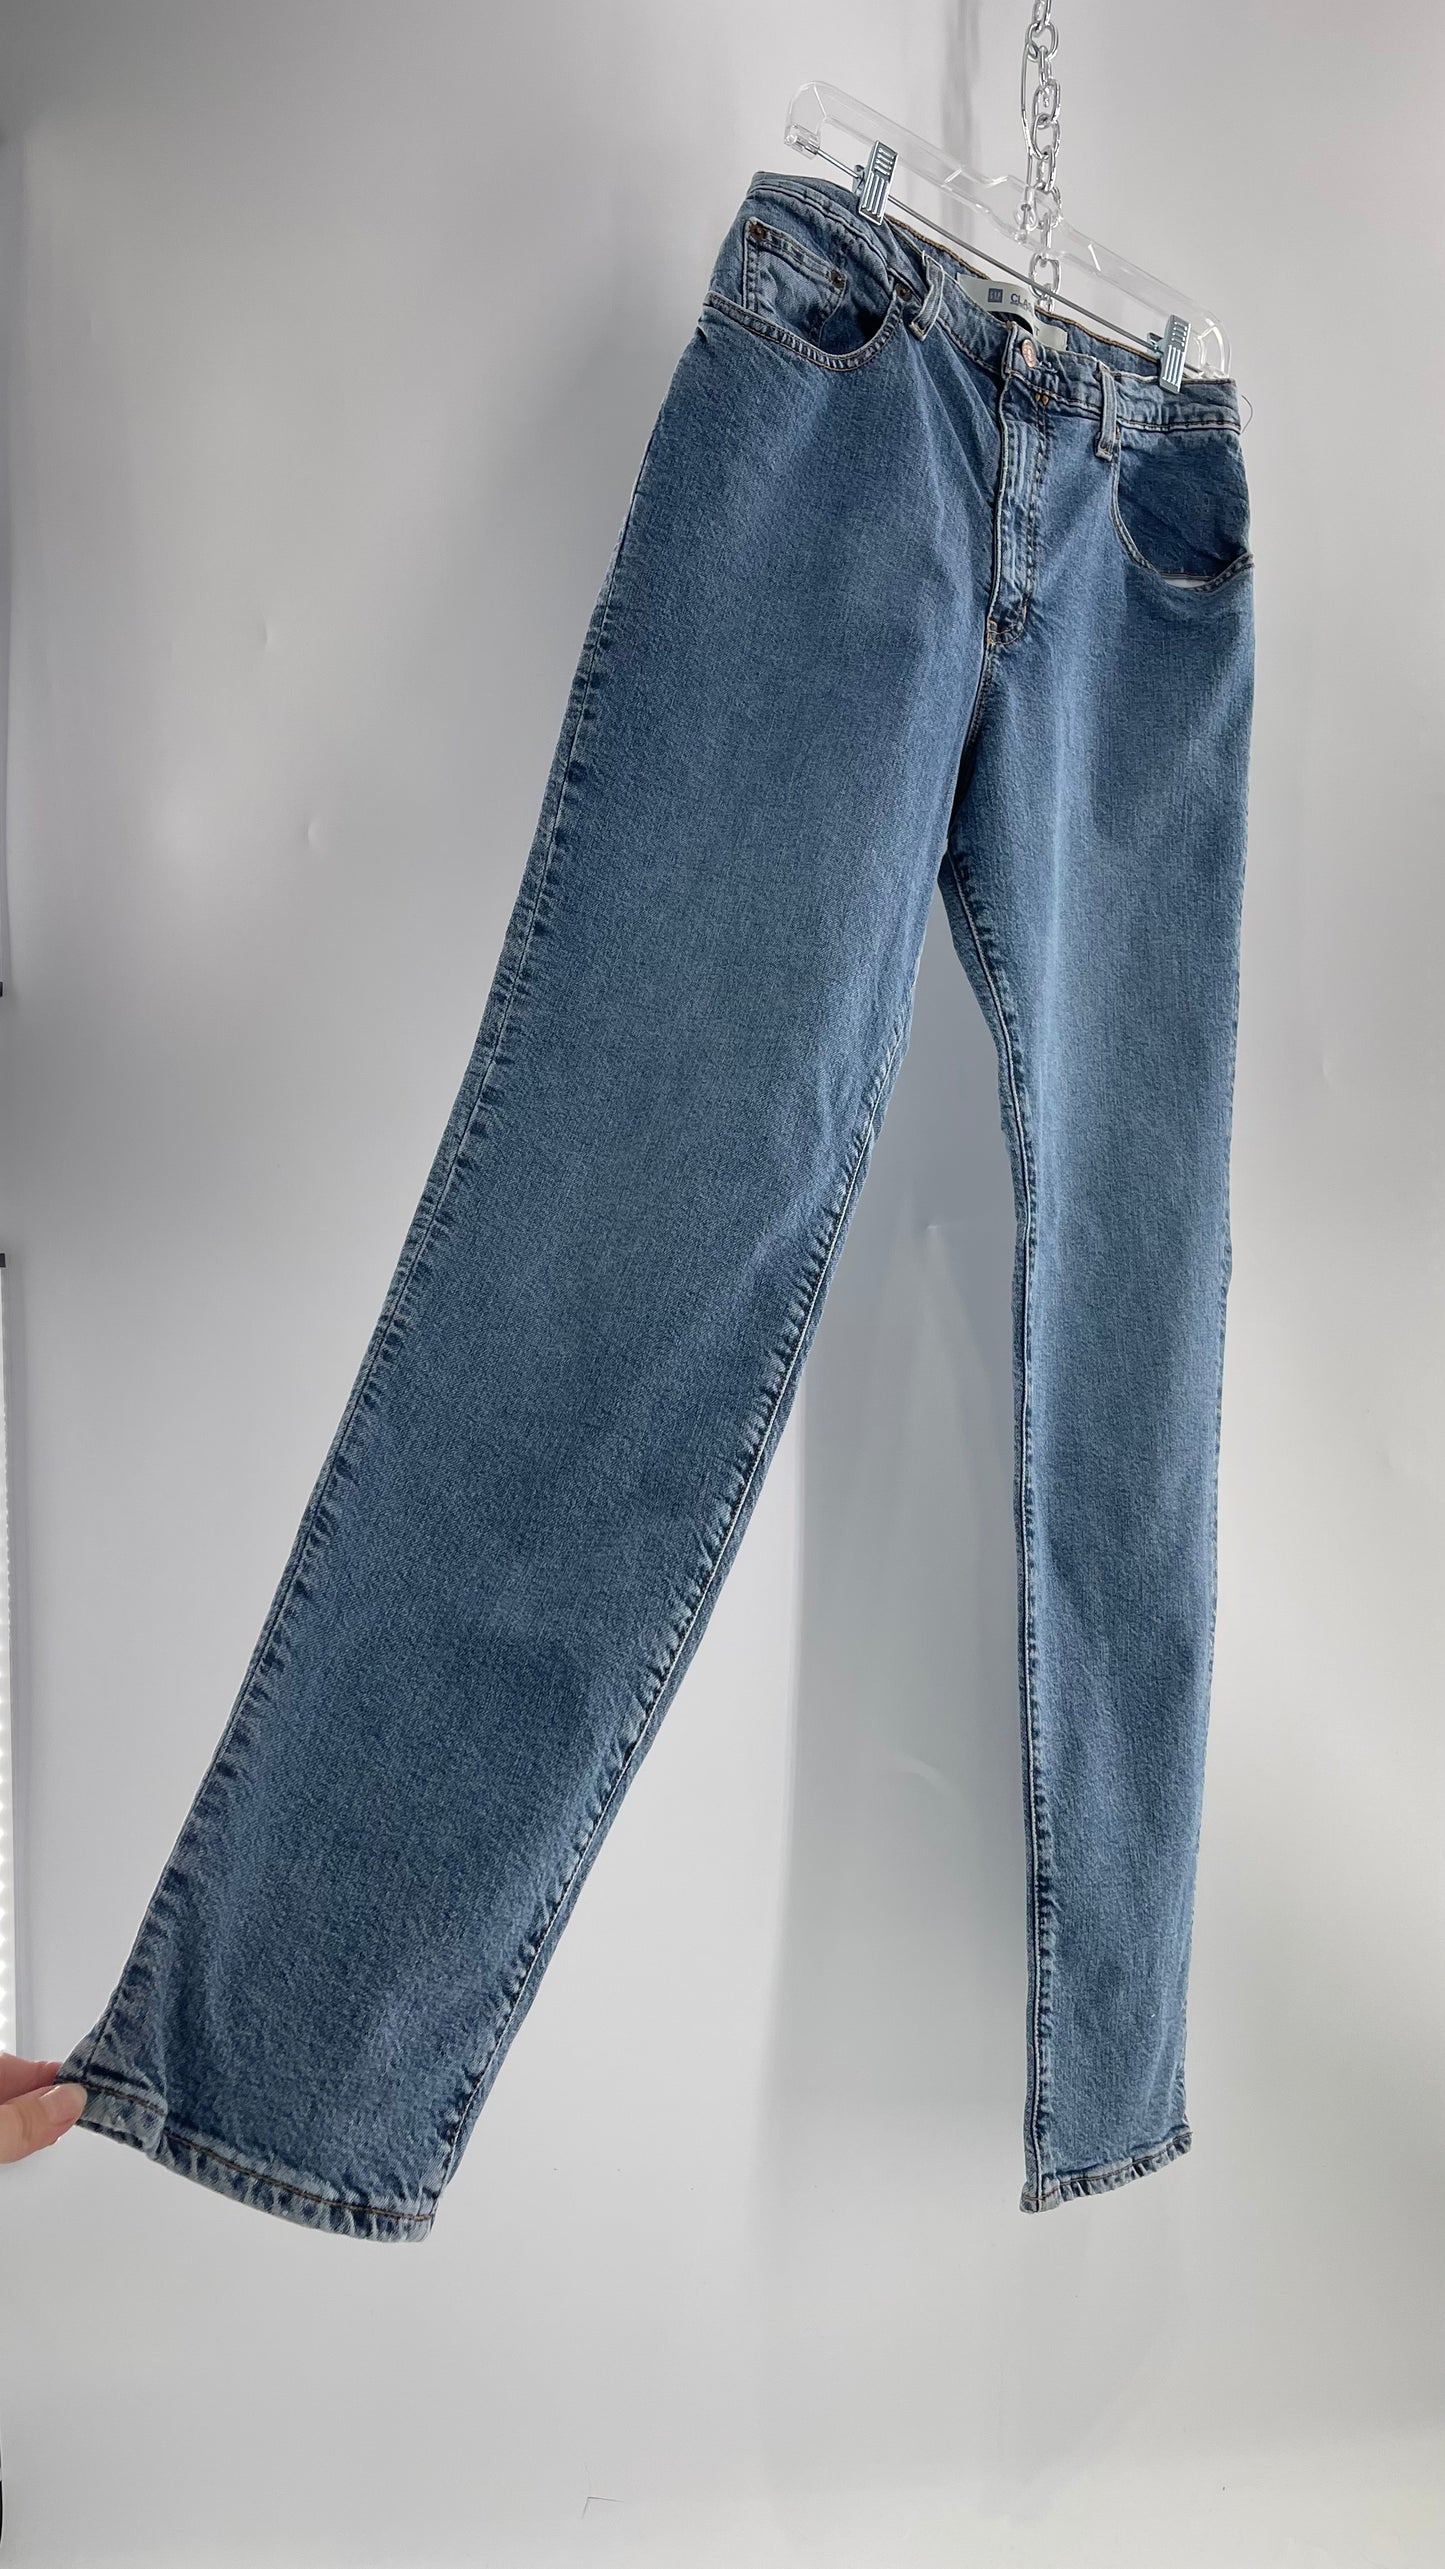 Gap Vintage HighWaist Light Wash Jeans (12)